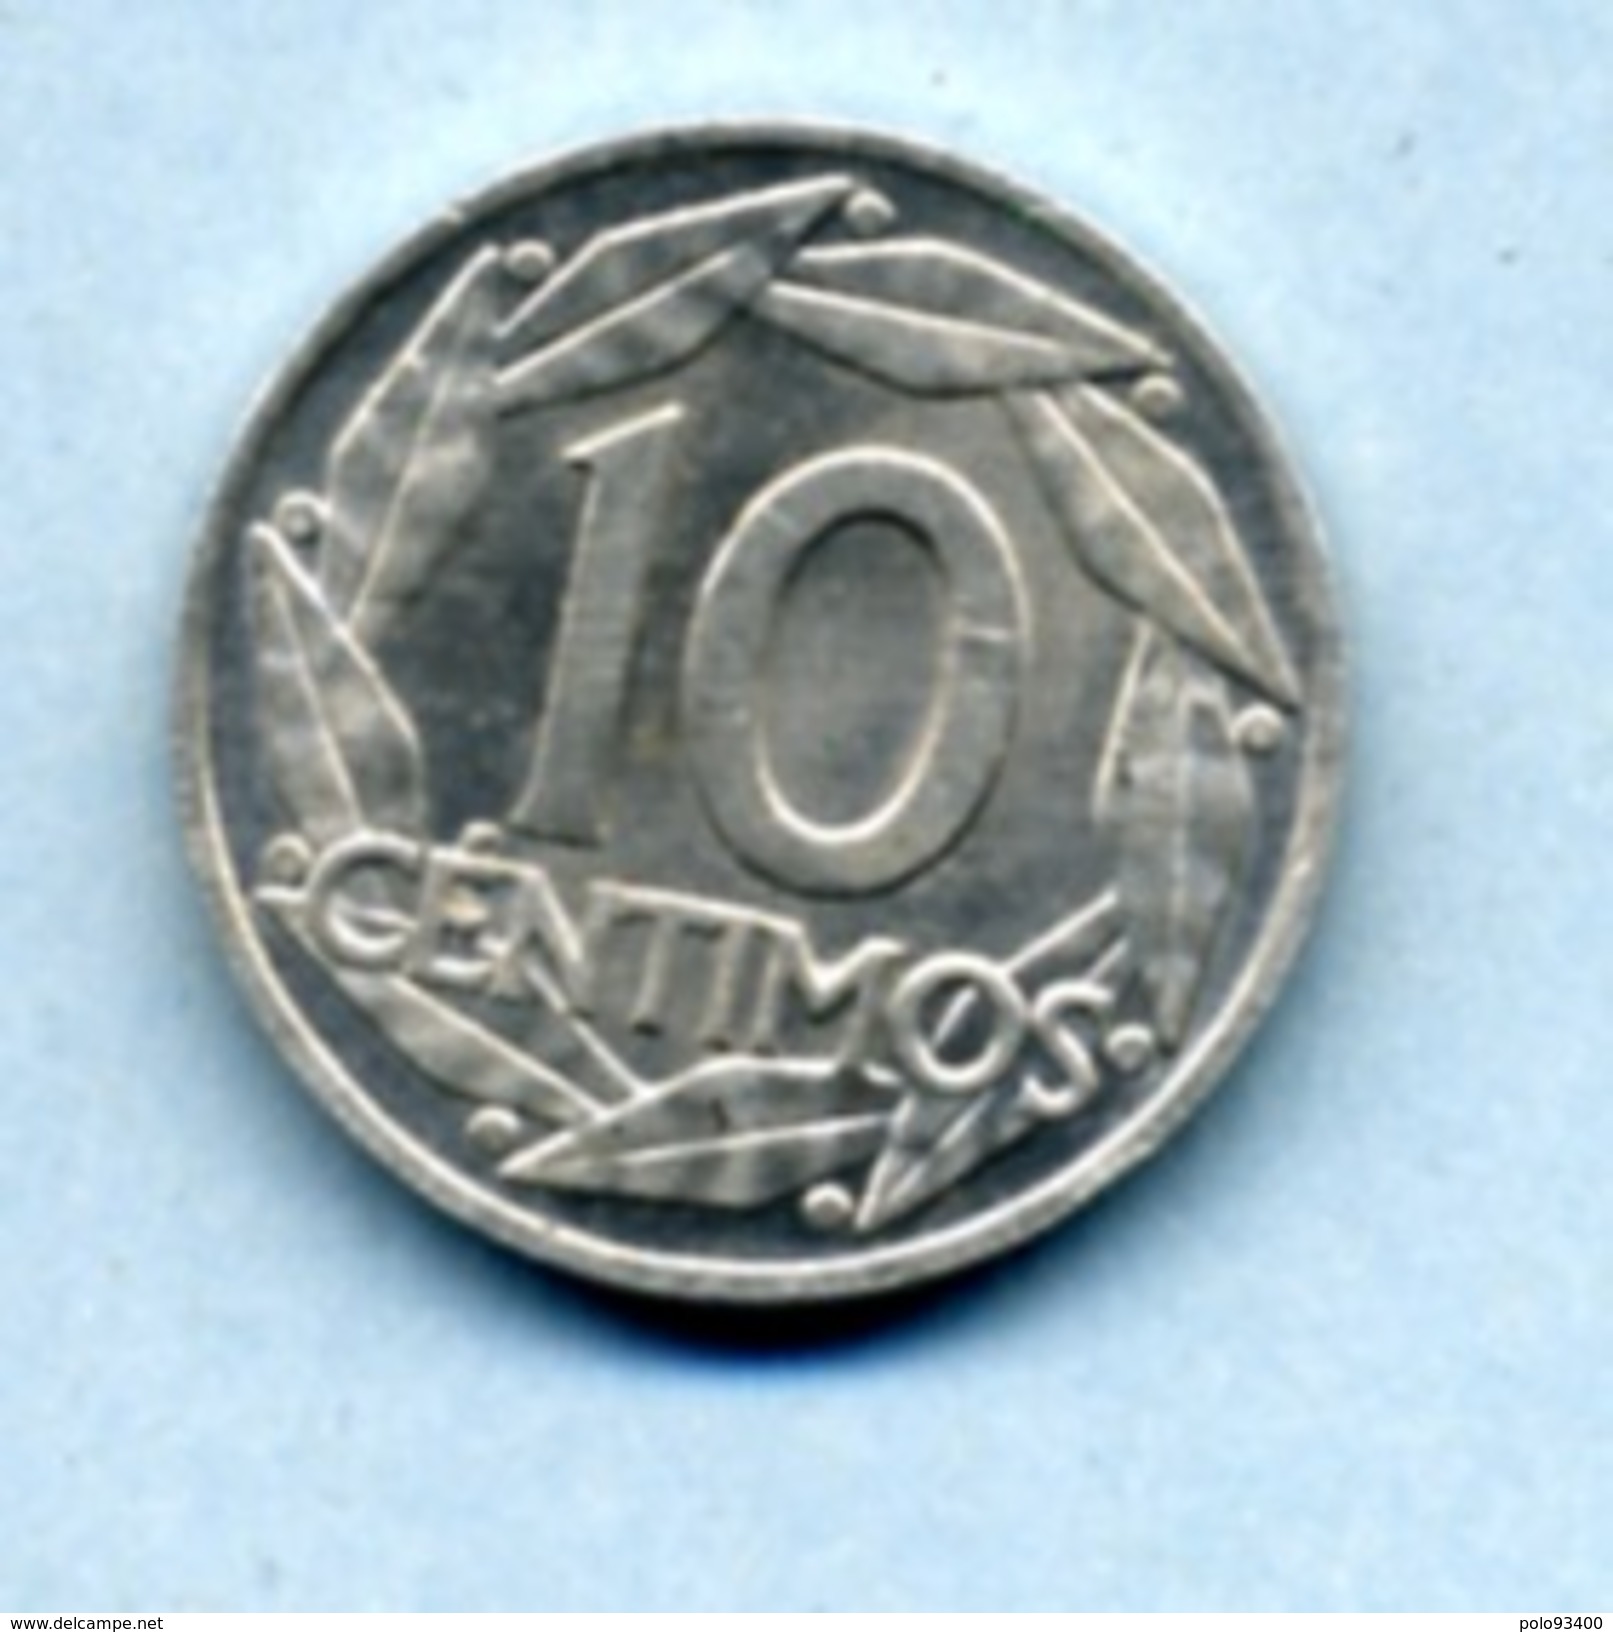 1959 10 CENTIMOS - 10 Centimos